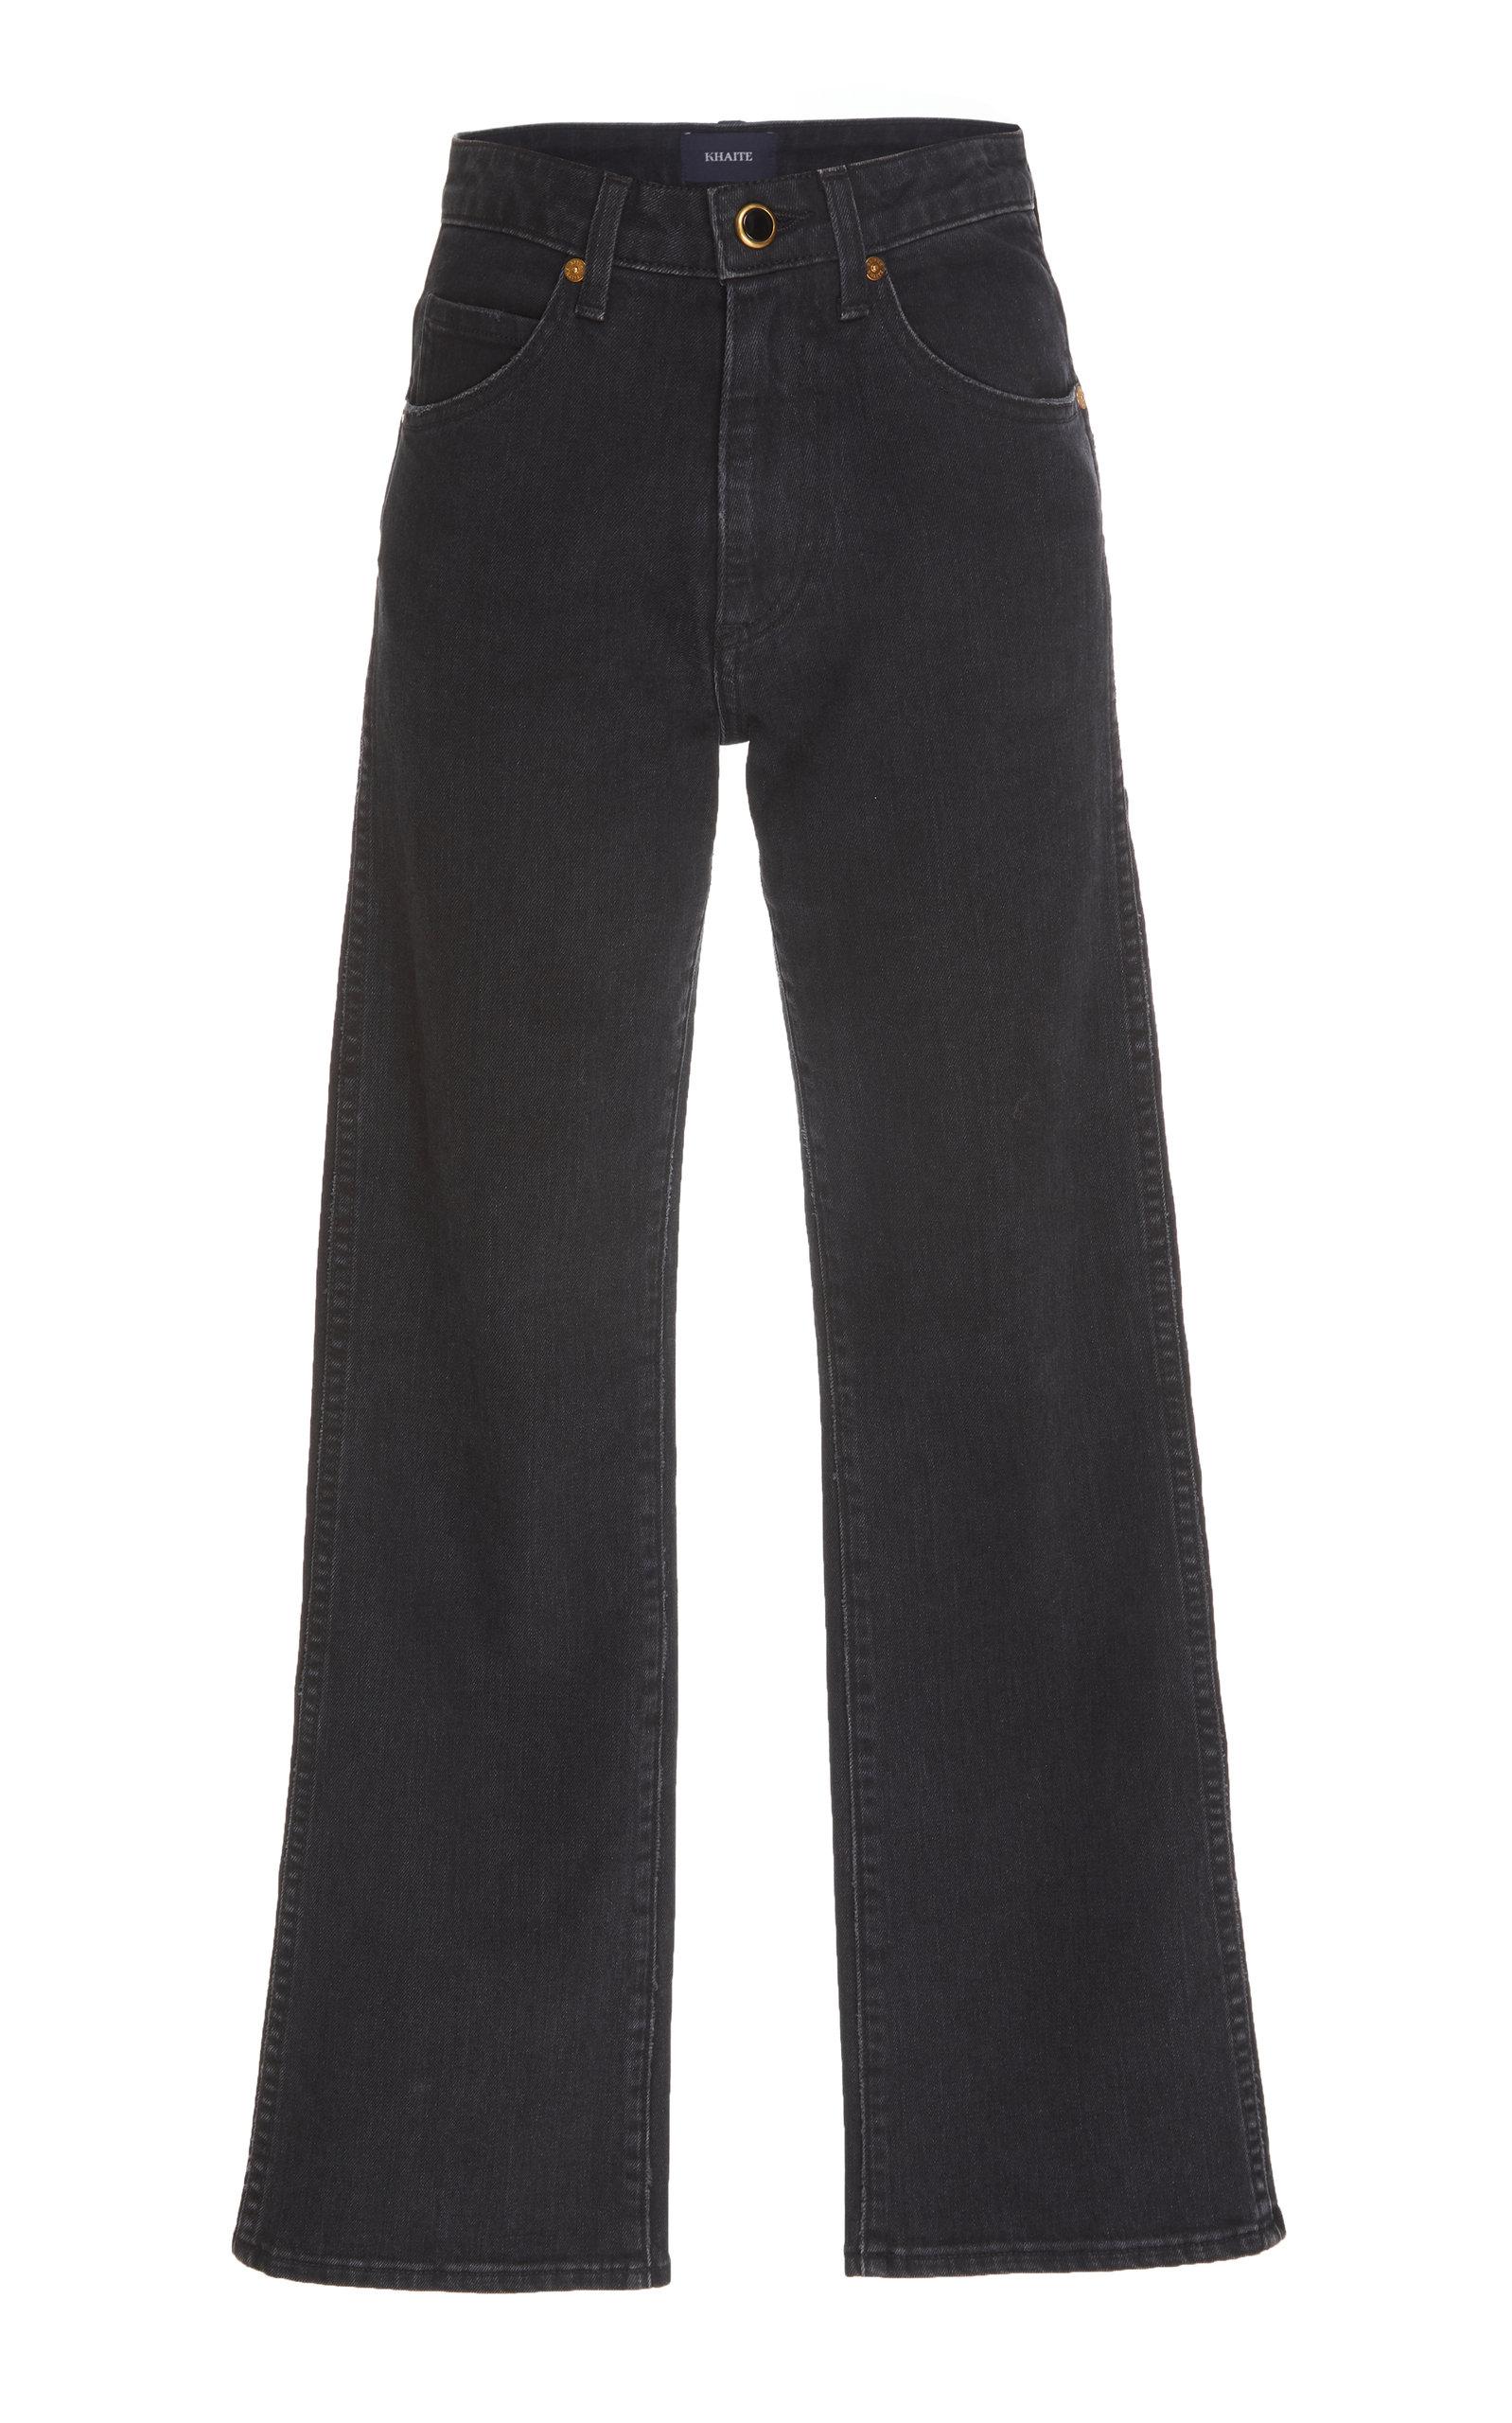 Khaite Cotton Vivian Cropped Flared Jeans in Black - Lyst